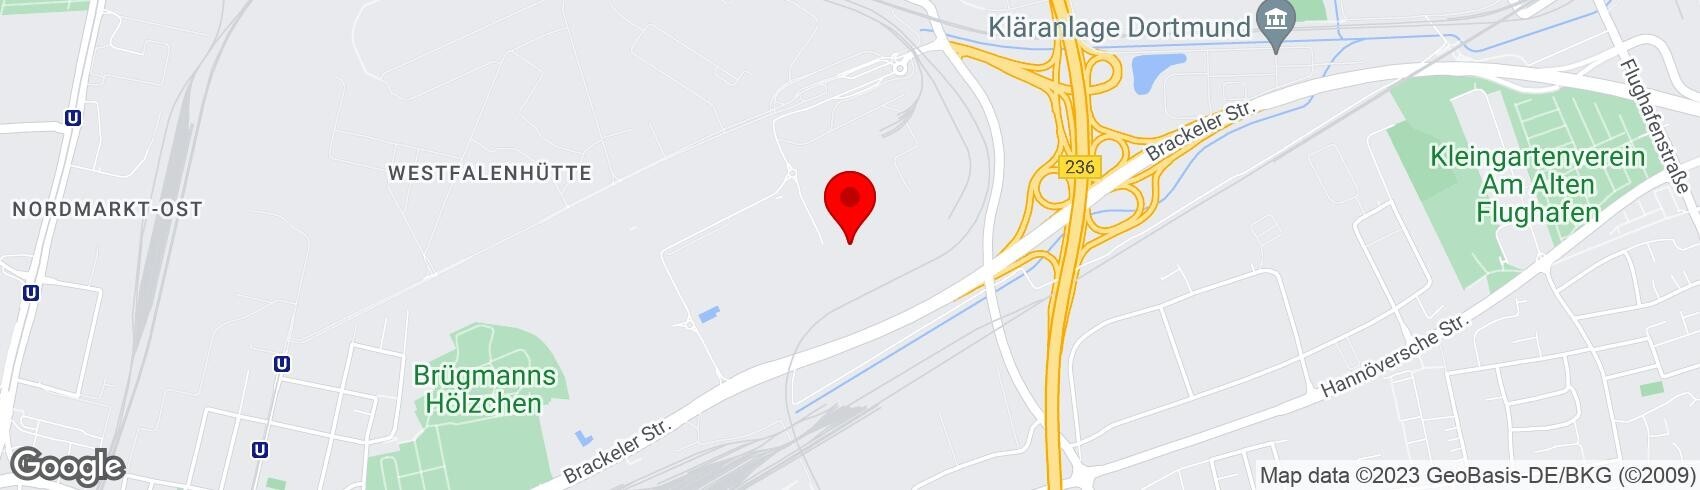 Location on Google Map (new window)